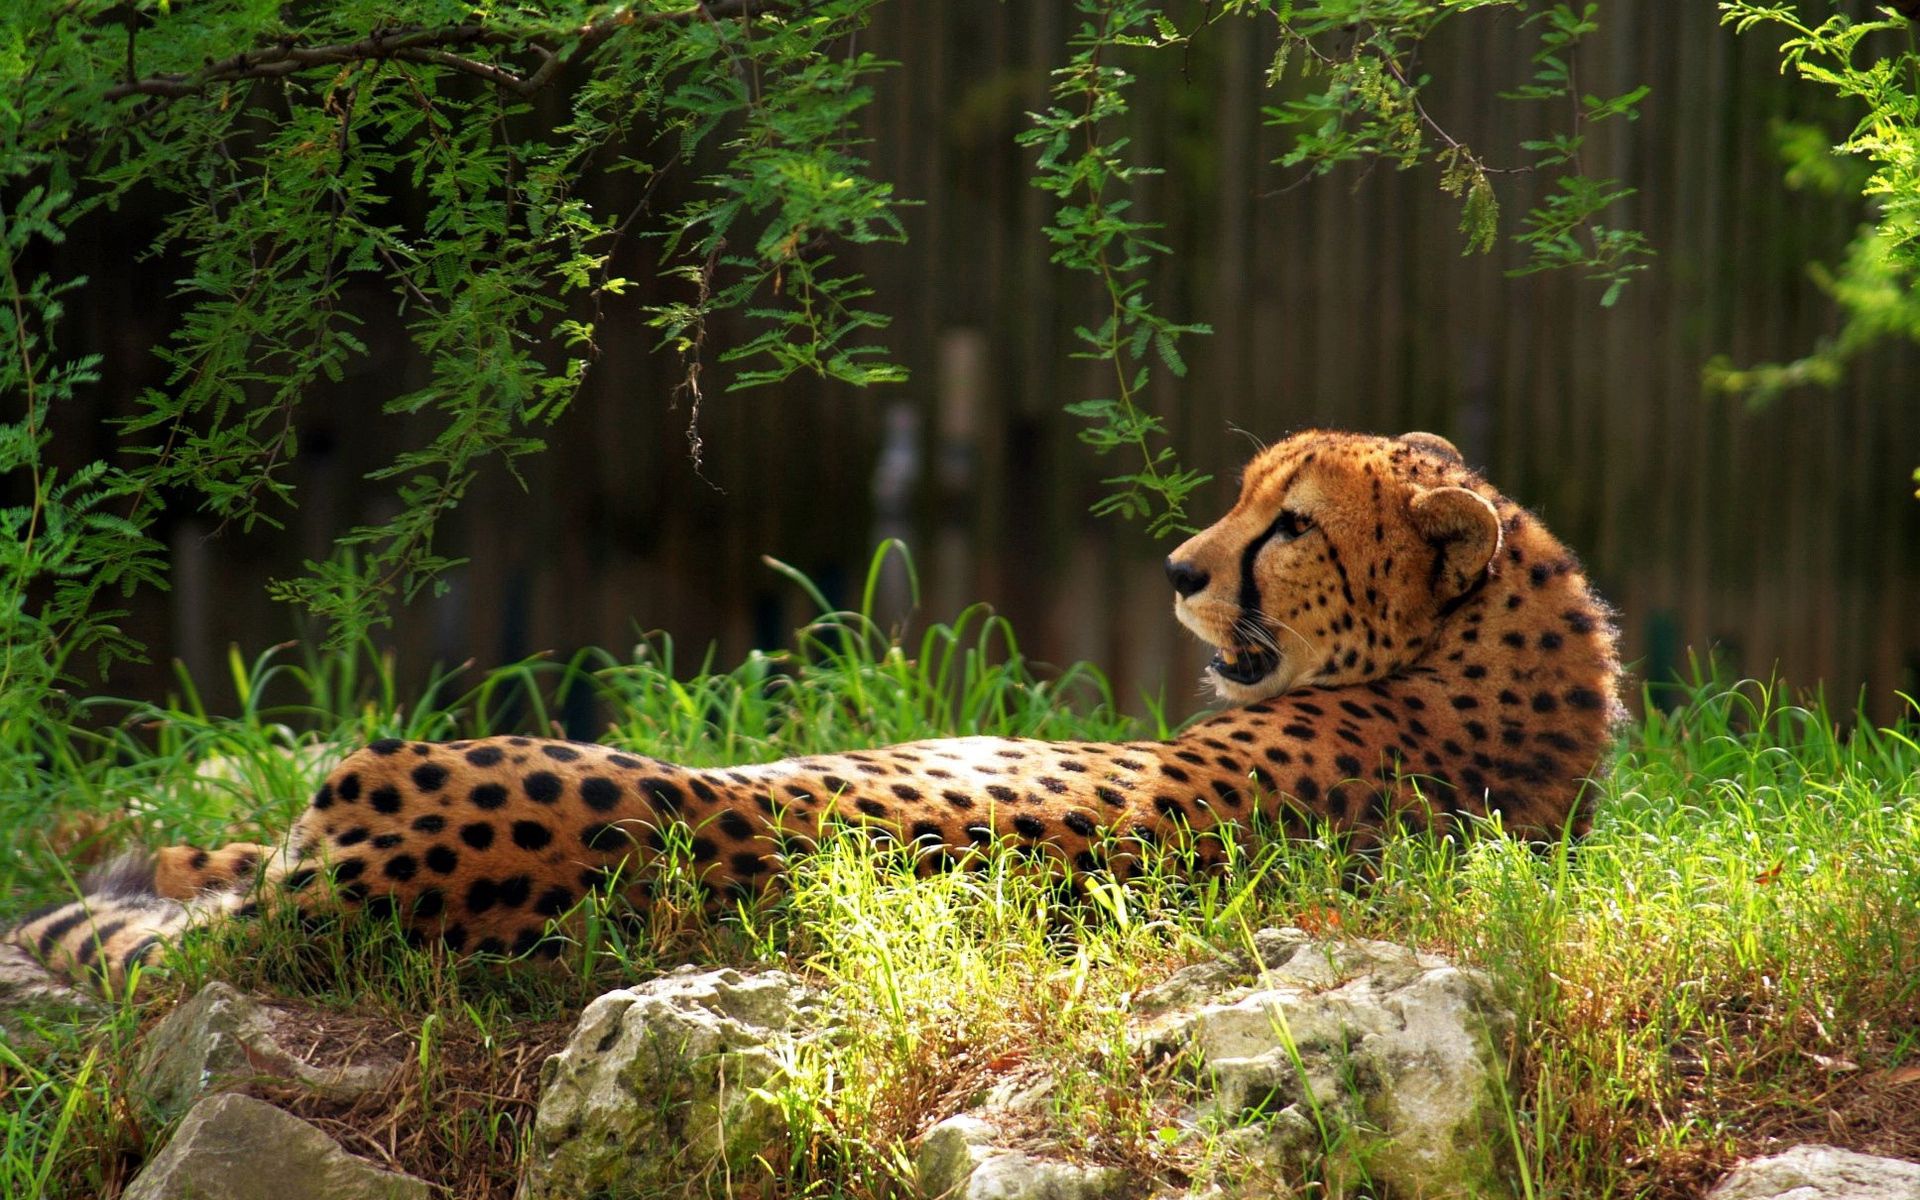 spotted, cheetah, animals, grass, spotty, big cat FHD, 4K, UHD